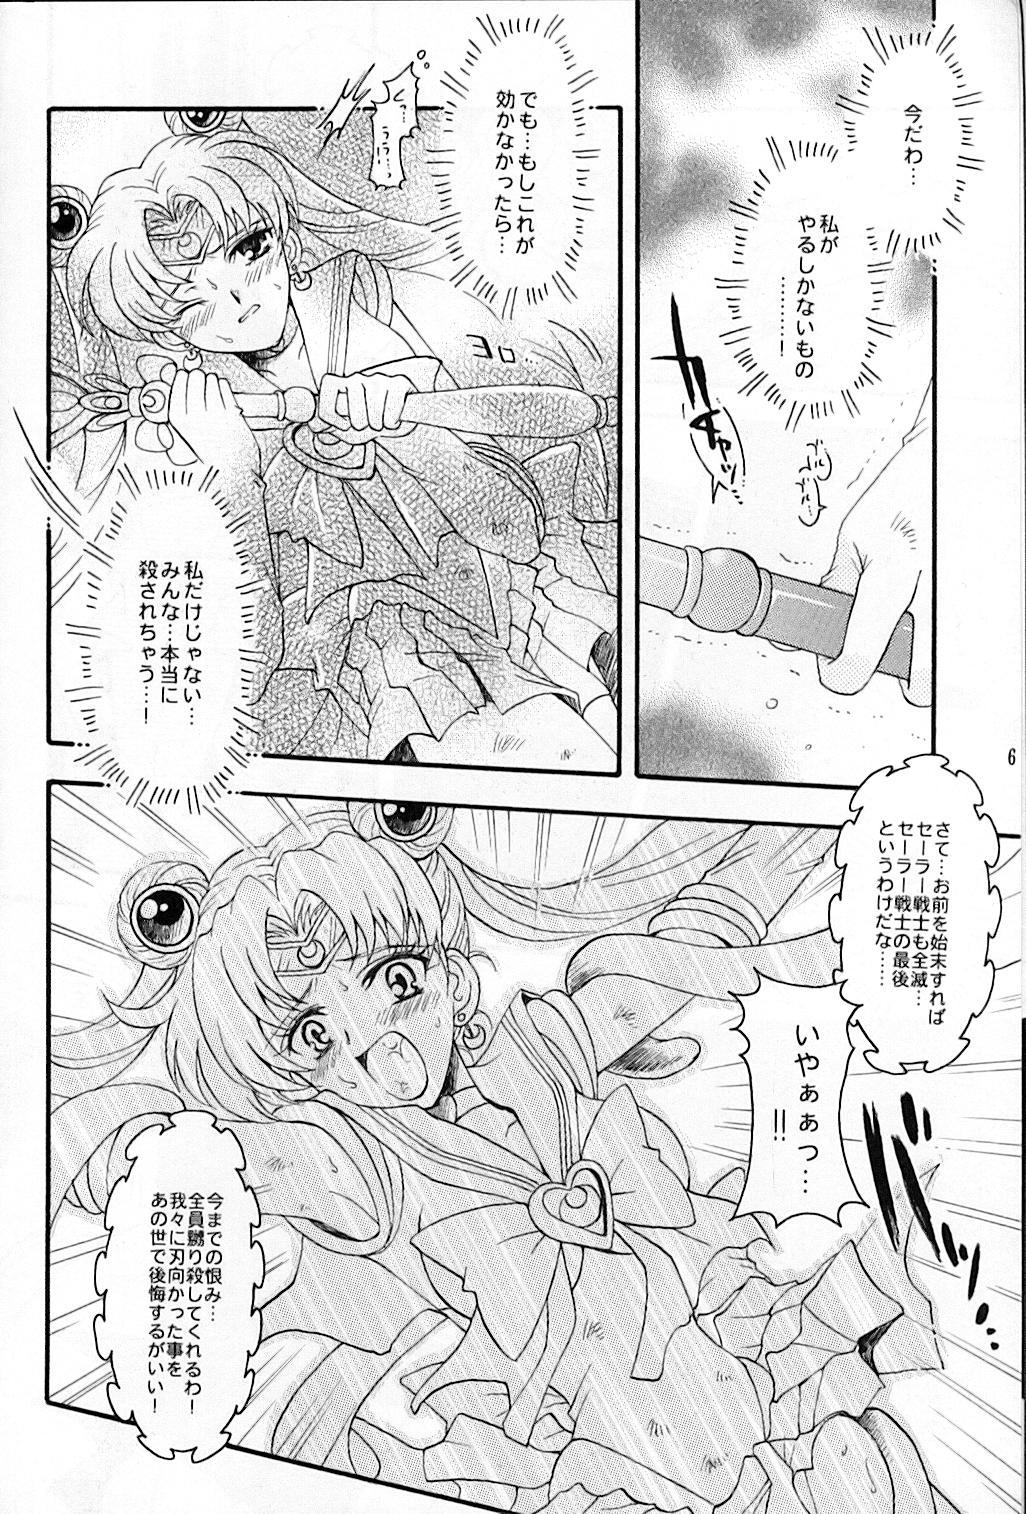 Old chanson de I'adieu - Sailor moon Hot Wife - Page 7